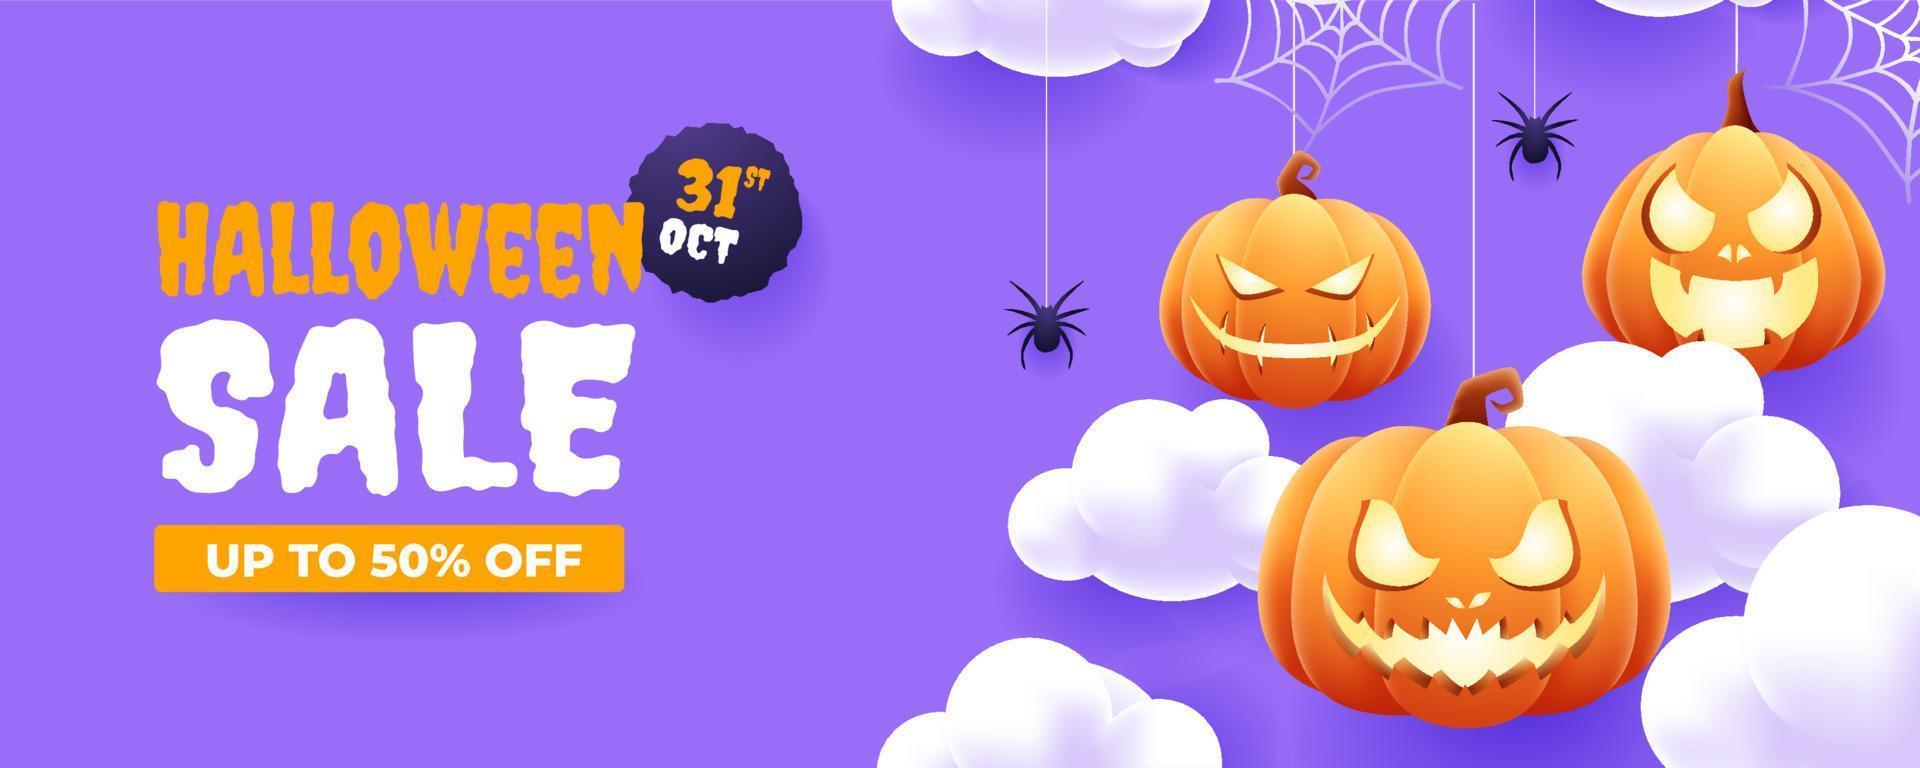 Happy Halloween Discount Promotion Sale Banner Template Design with 3d Halloween Pumpkin and Spider in Cloud vector